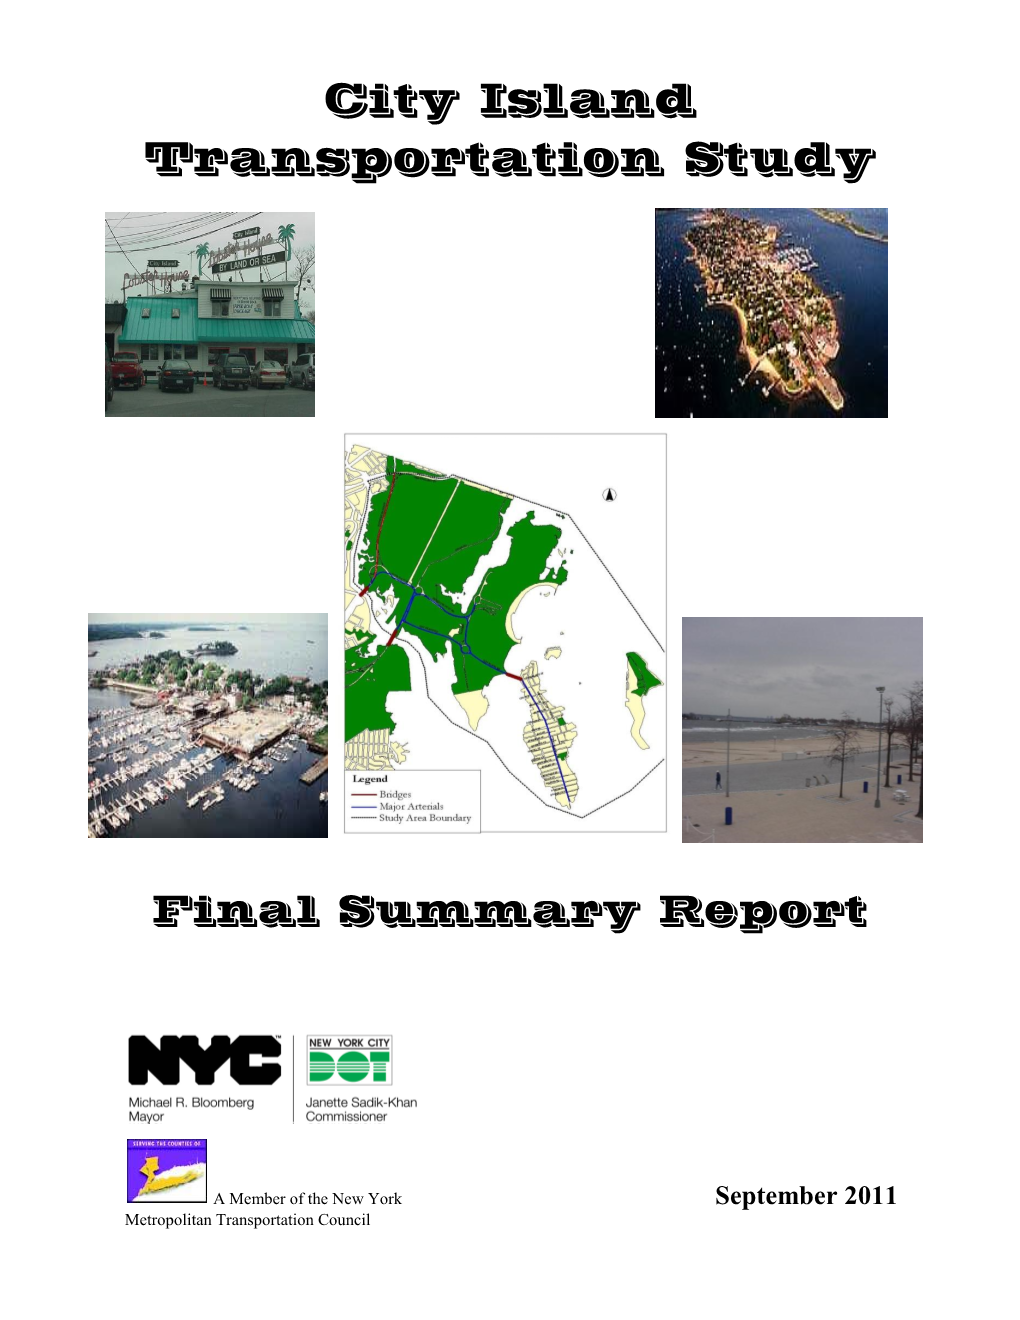 City Island Transportation Study